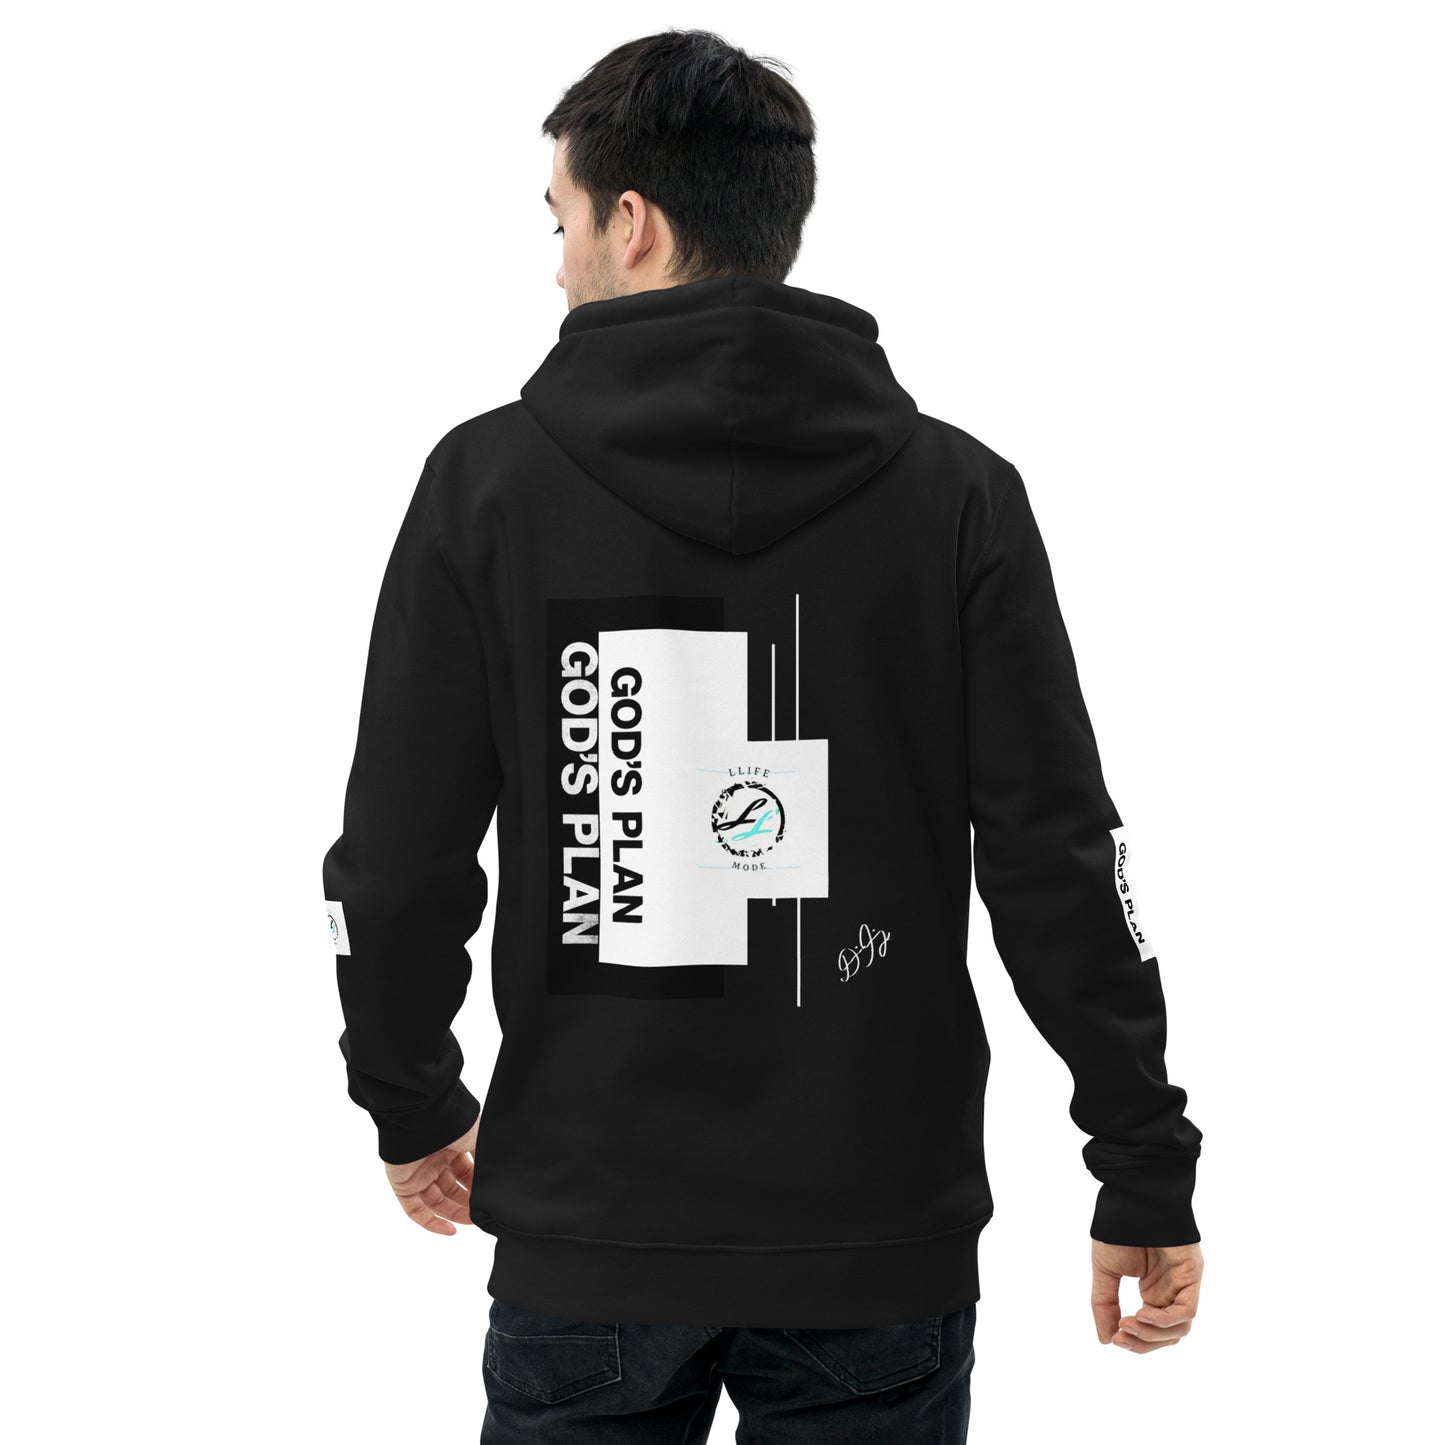 Unisex essential eco hoodie